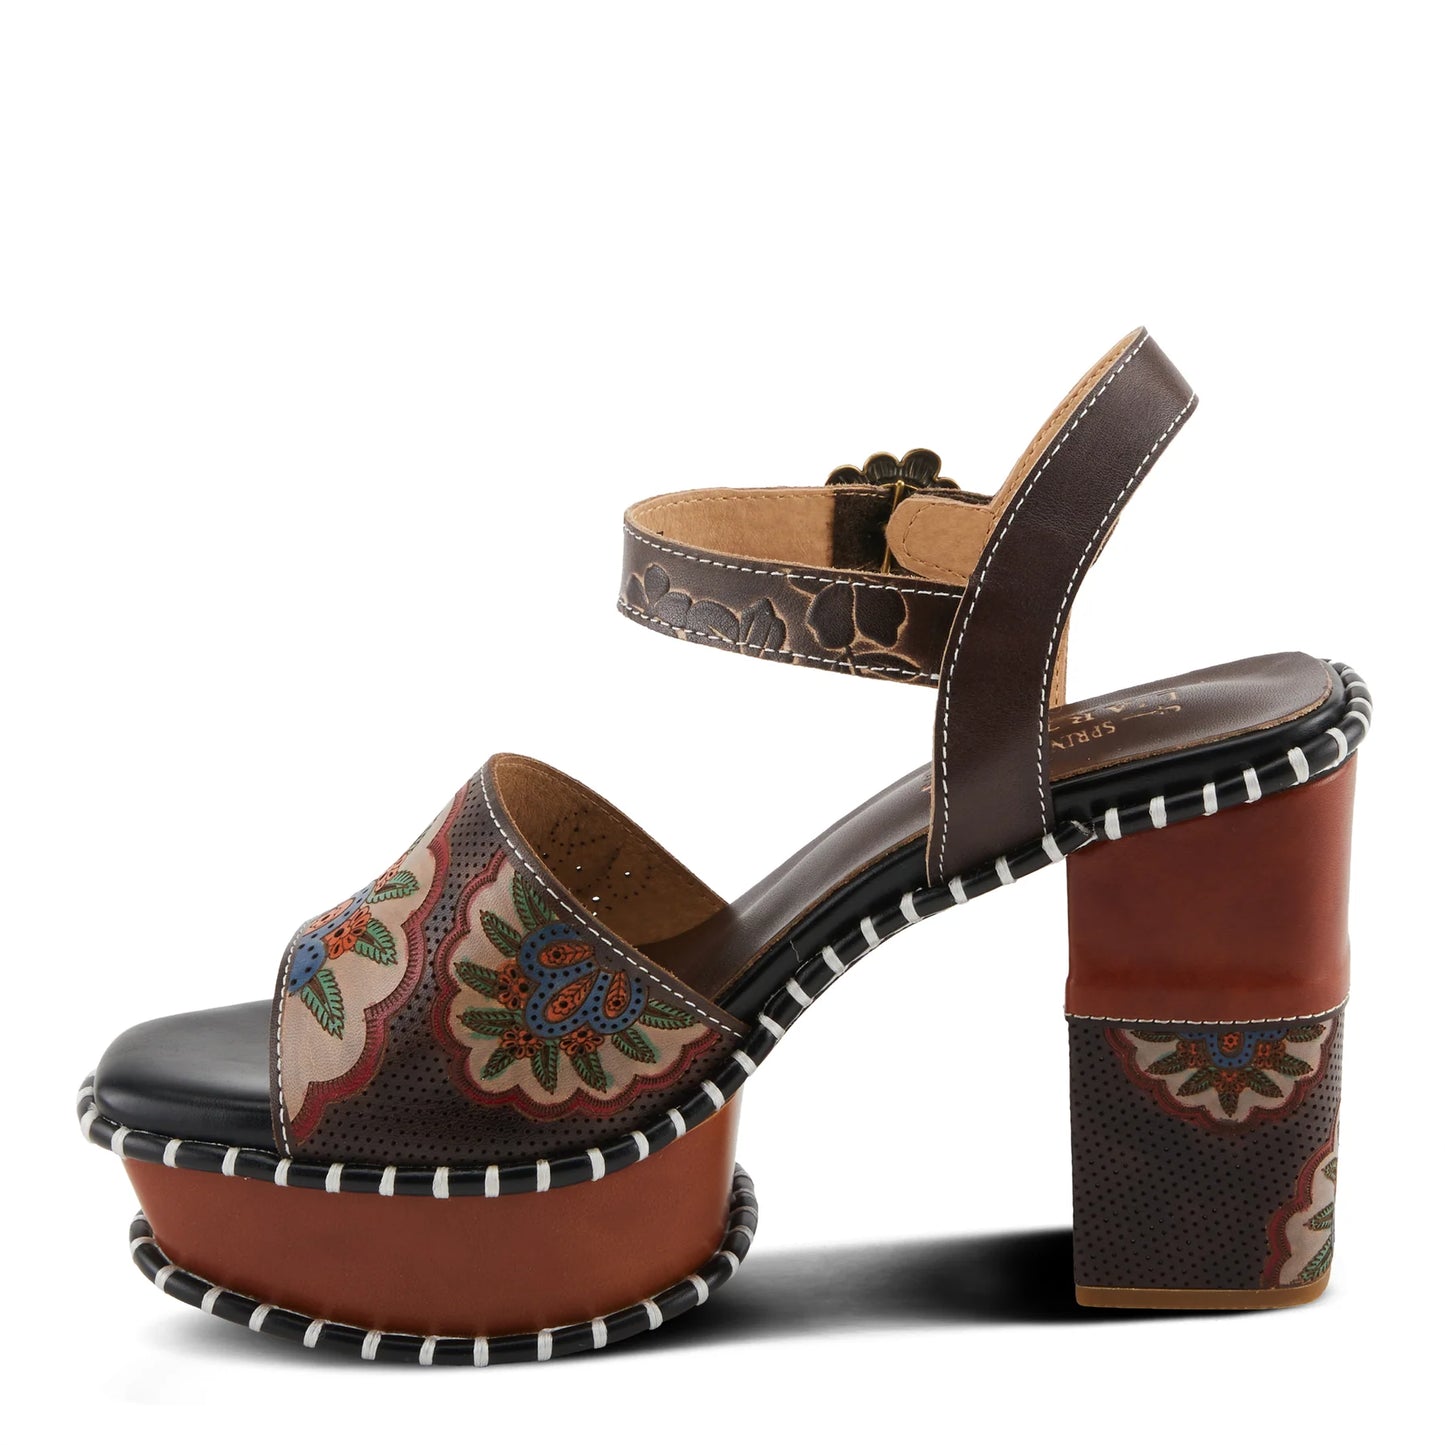 L'Artiste by Spring Step Women's L'Artiste Go Get Em Sandals - Chocolate Multi